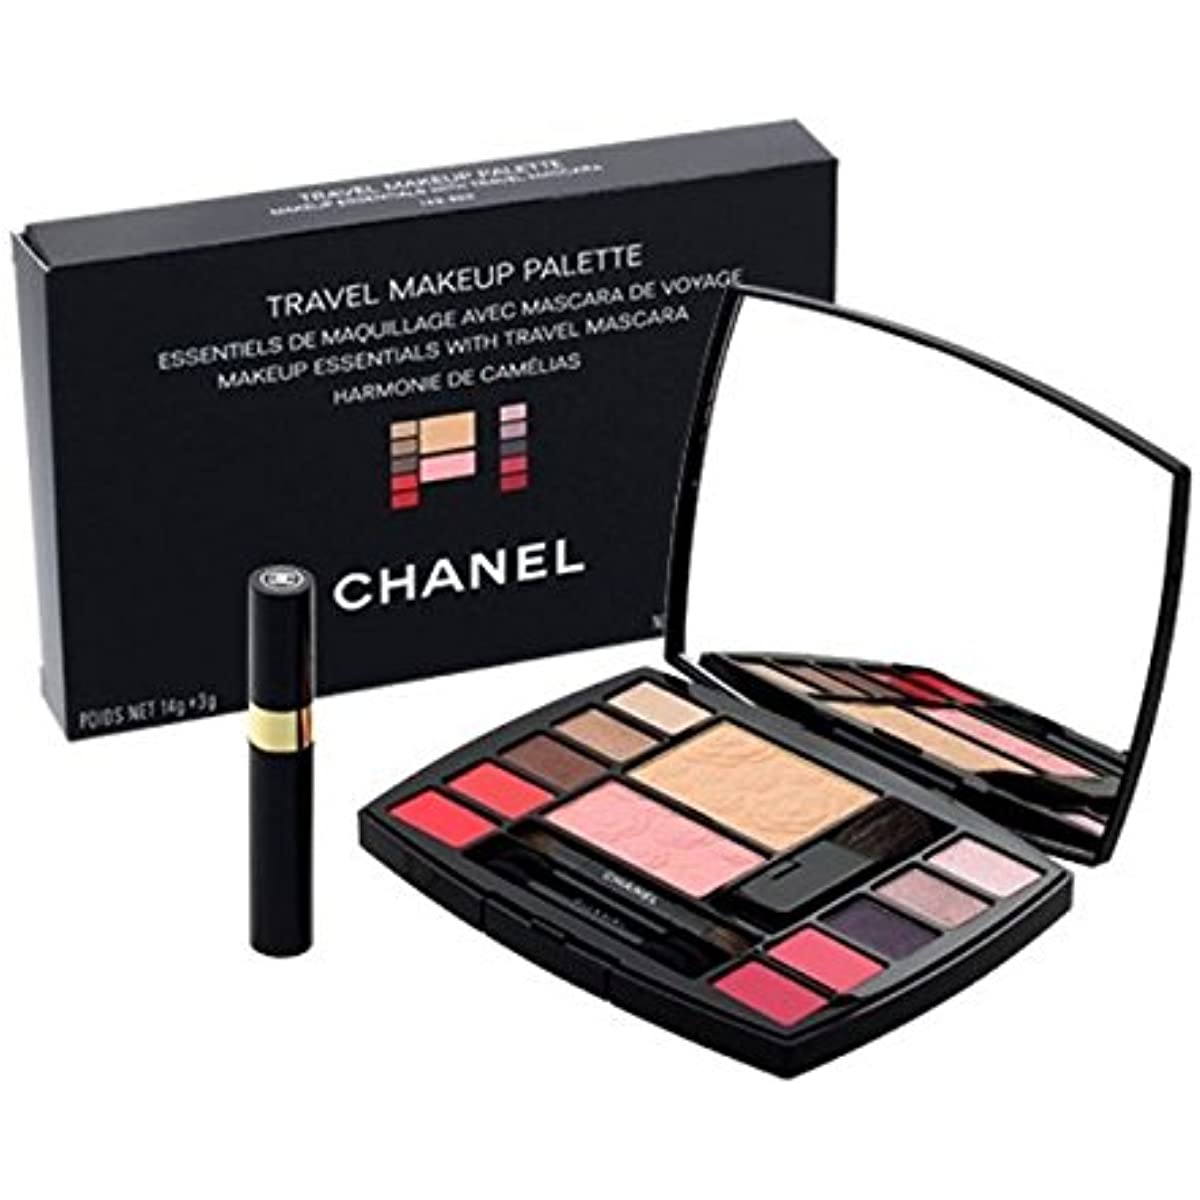 Chanel Travel Makeup Palette #Armonide Camellia [2018, overseas